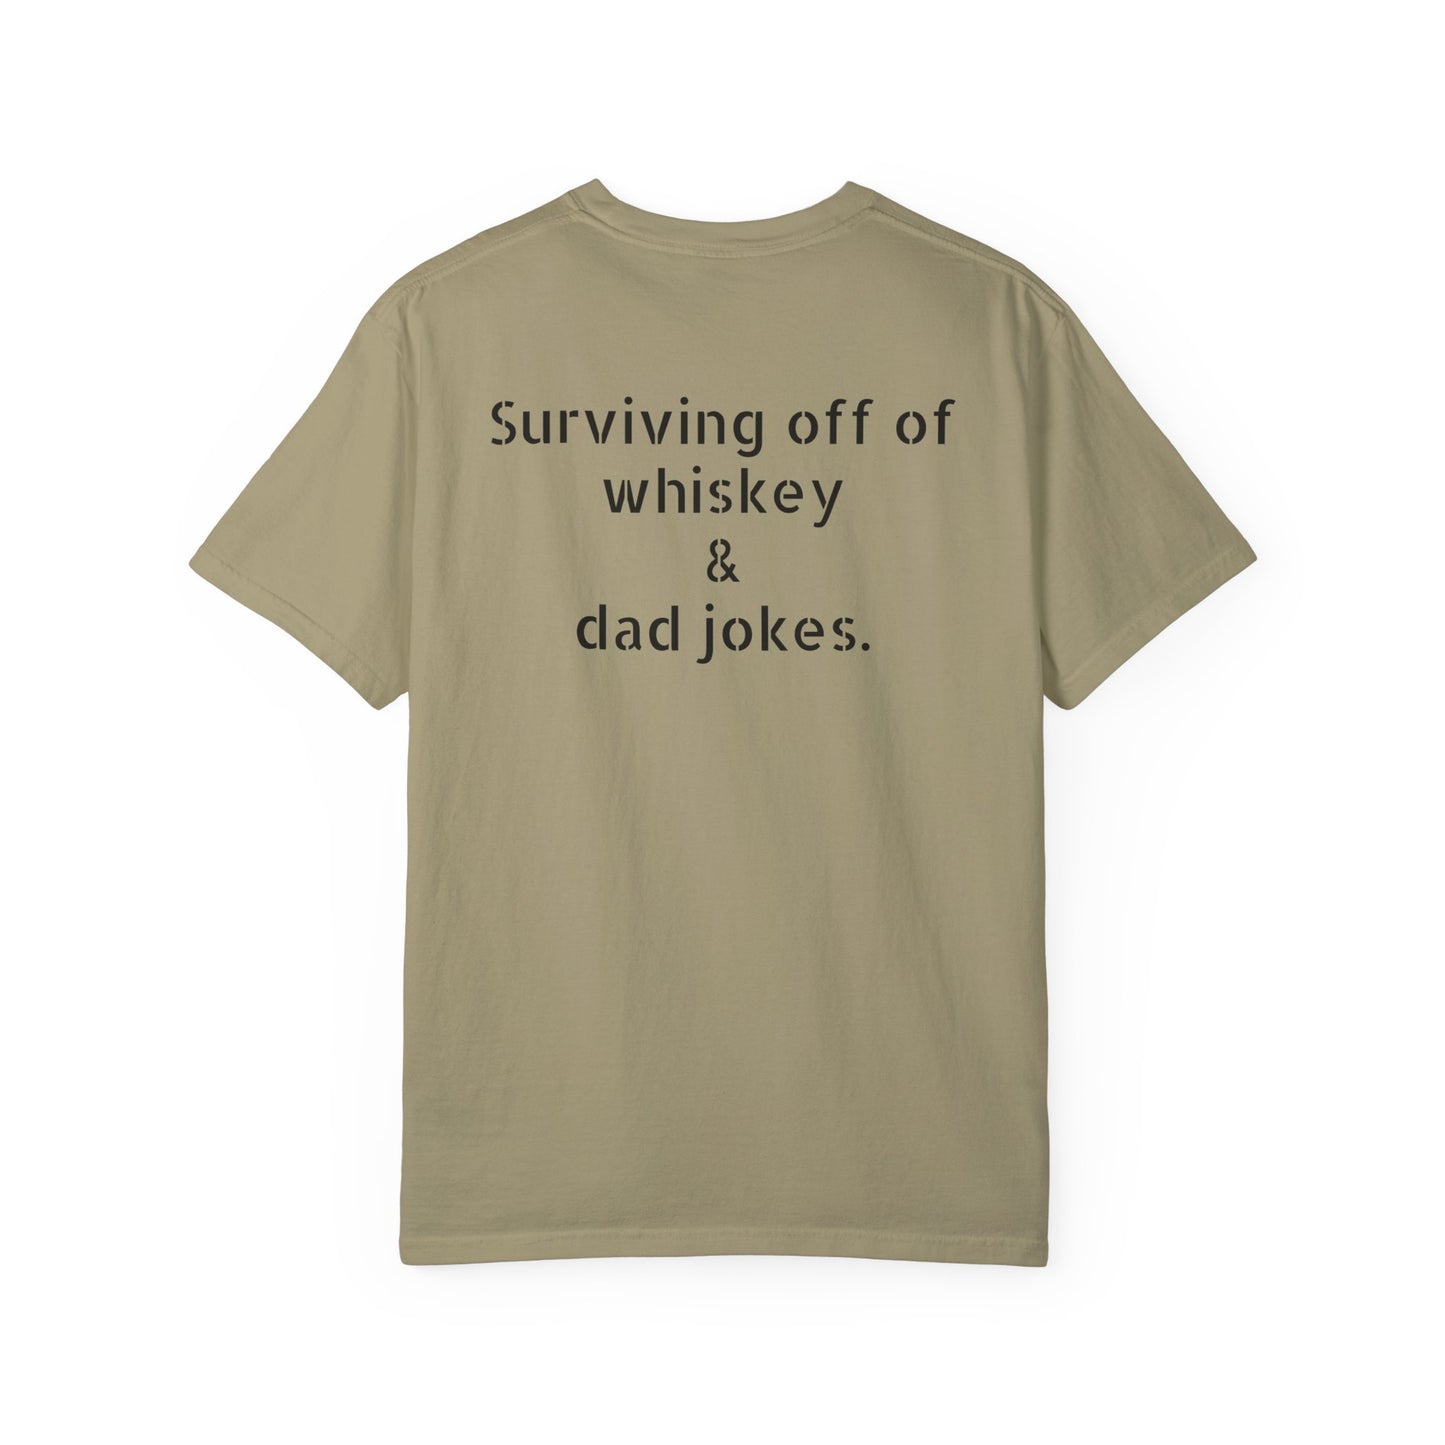 "Surviving off of whiskey & dad jokes" Tee